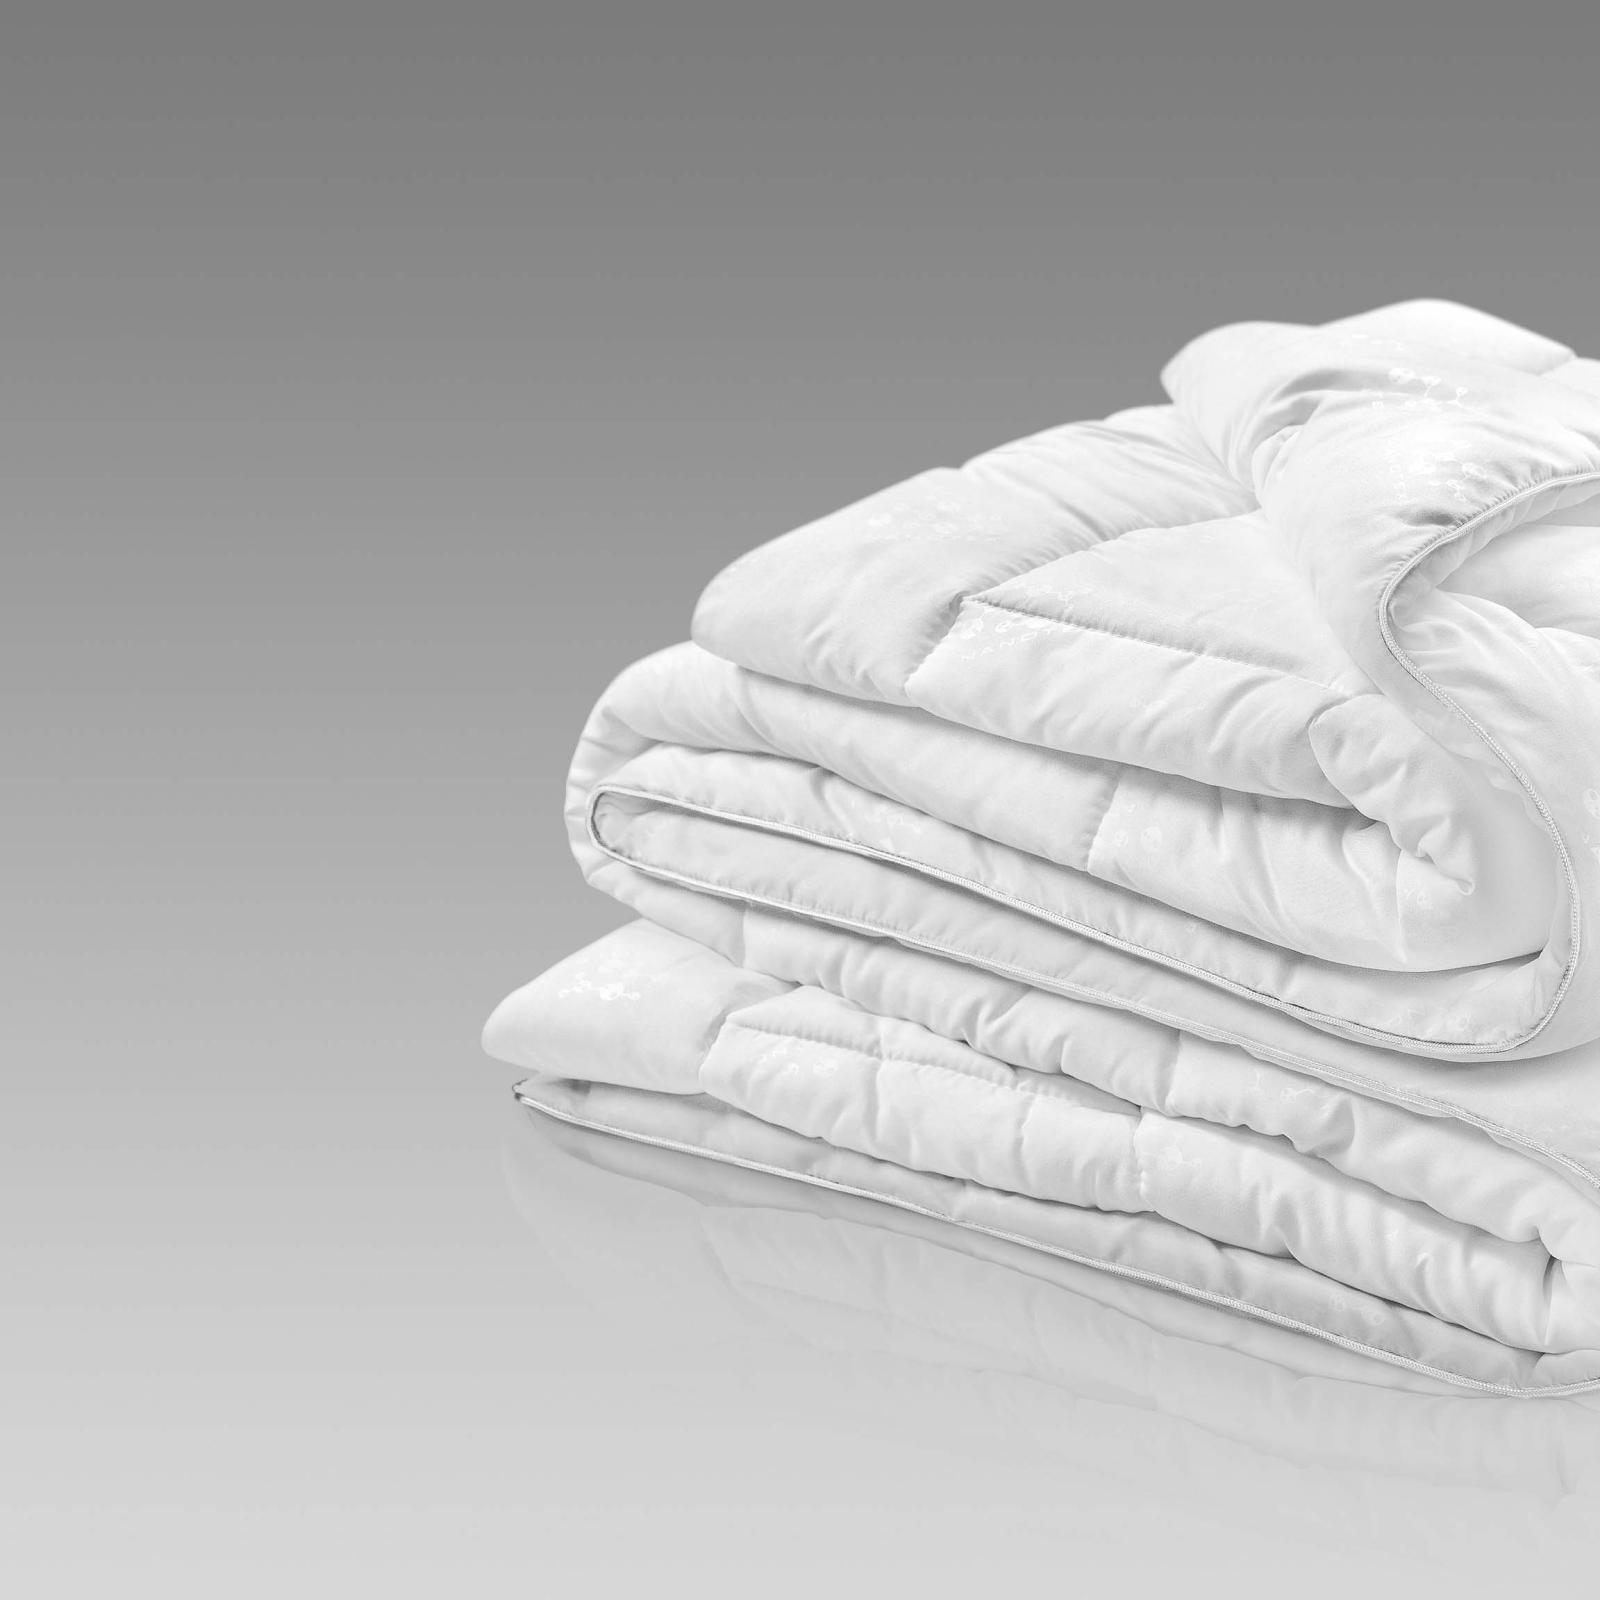 Одеяло Гелиос 140х200 см (20.04.12.0120), цвет белый, размер 140х200 см - фото 9